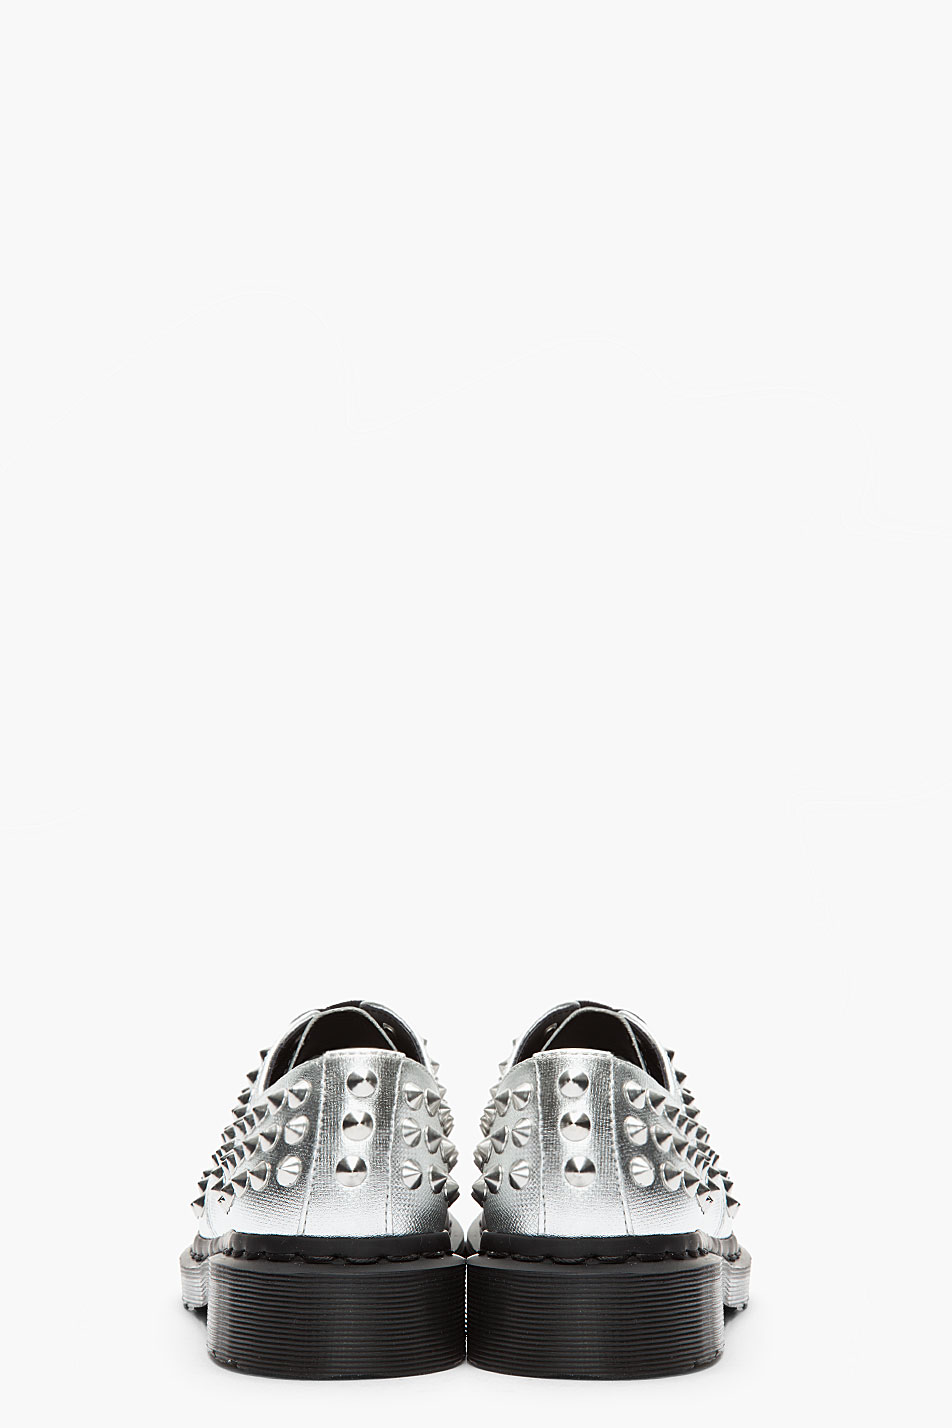 Dr. Martens Metallic Silver Studded 3eye Harlen Shoes | Lyst